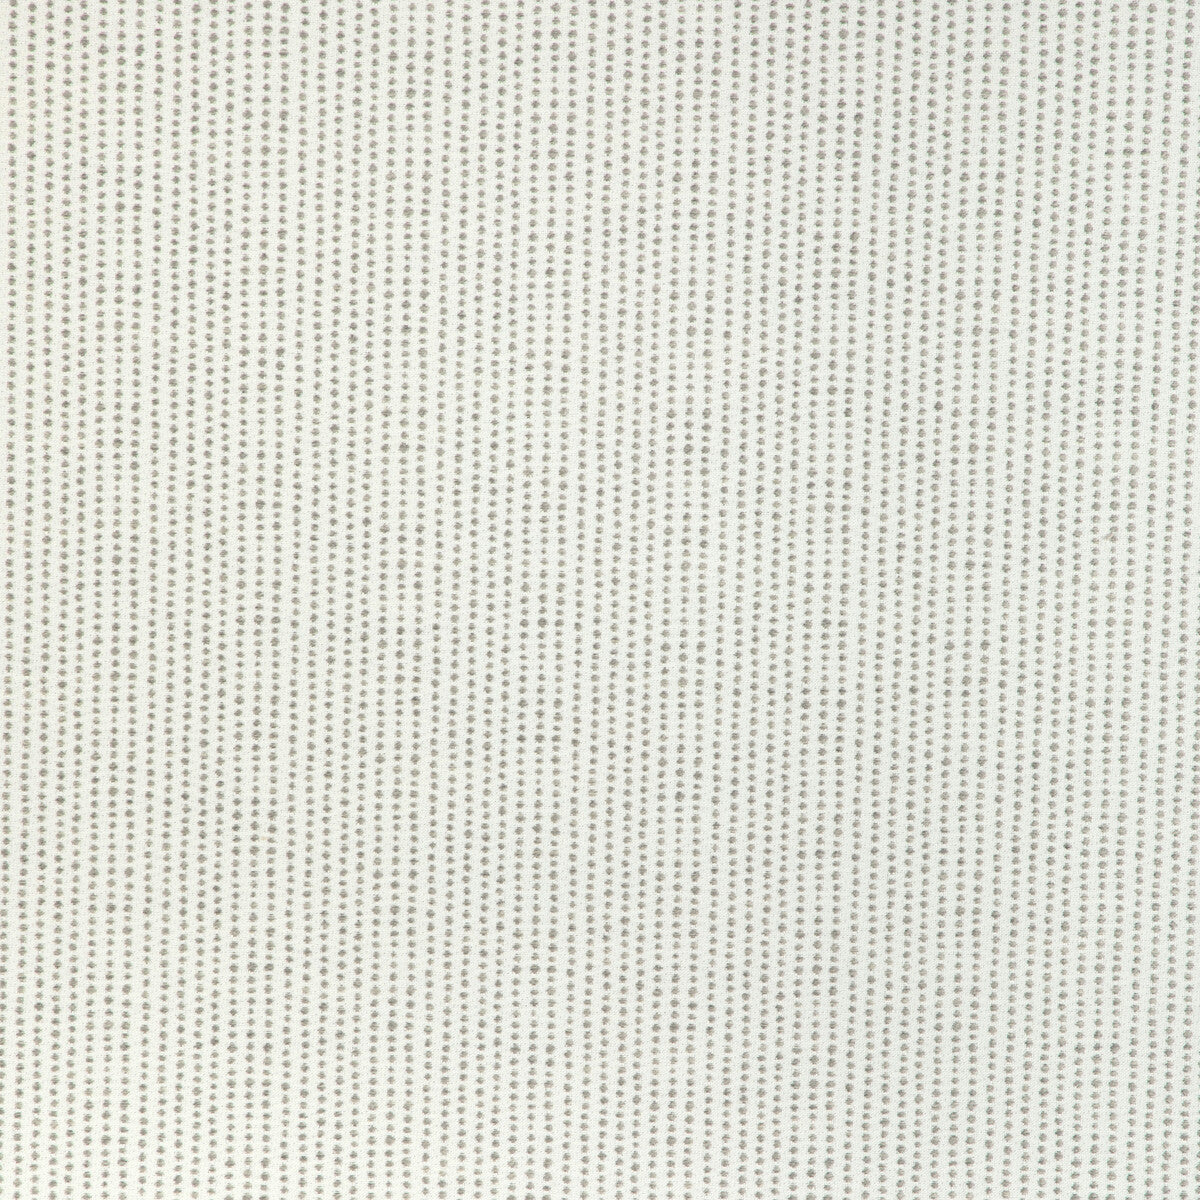 Kravet Design fabric in 36771-11 color - pattern 36771.11.0 - by Kravet Design in the Sea Island Indoor/Outdoor collection